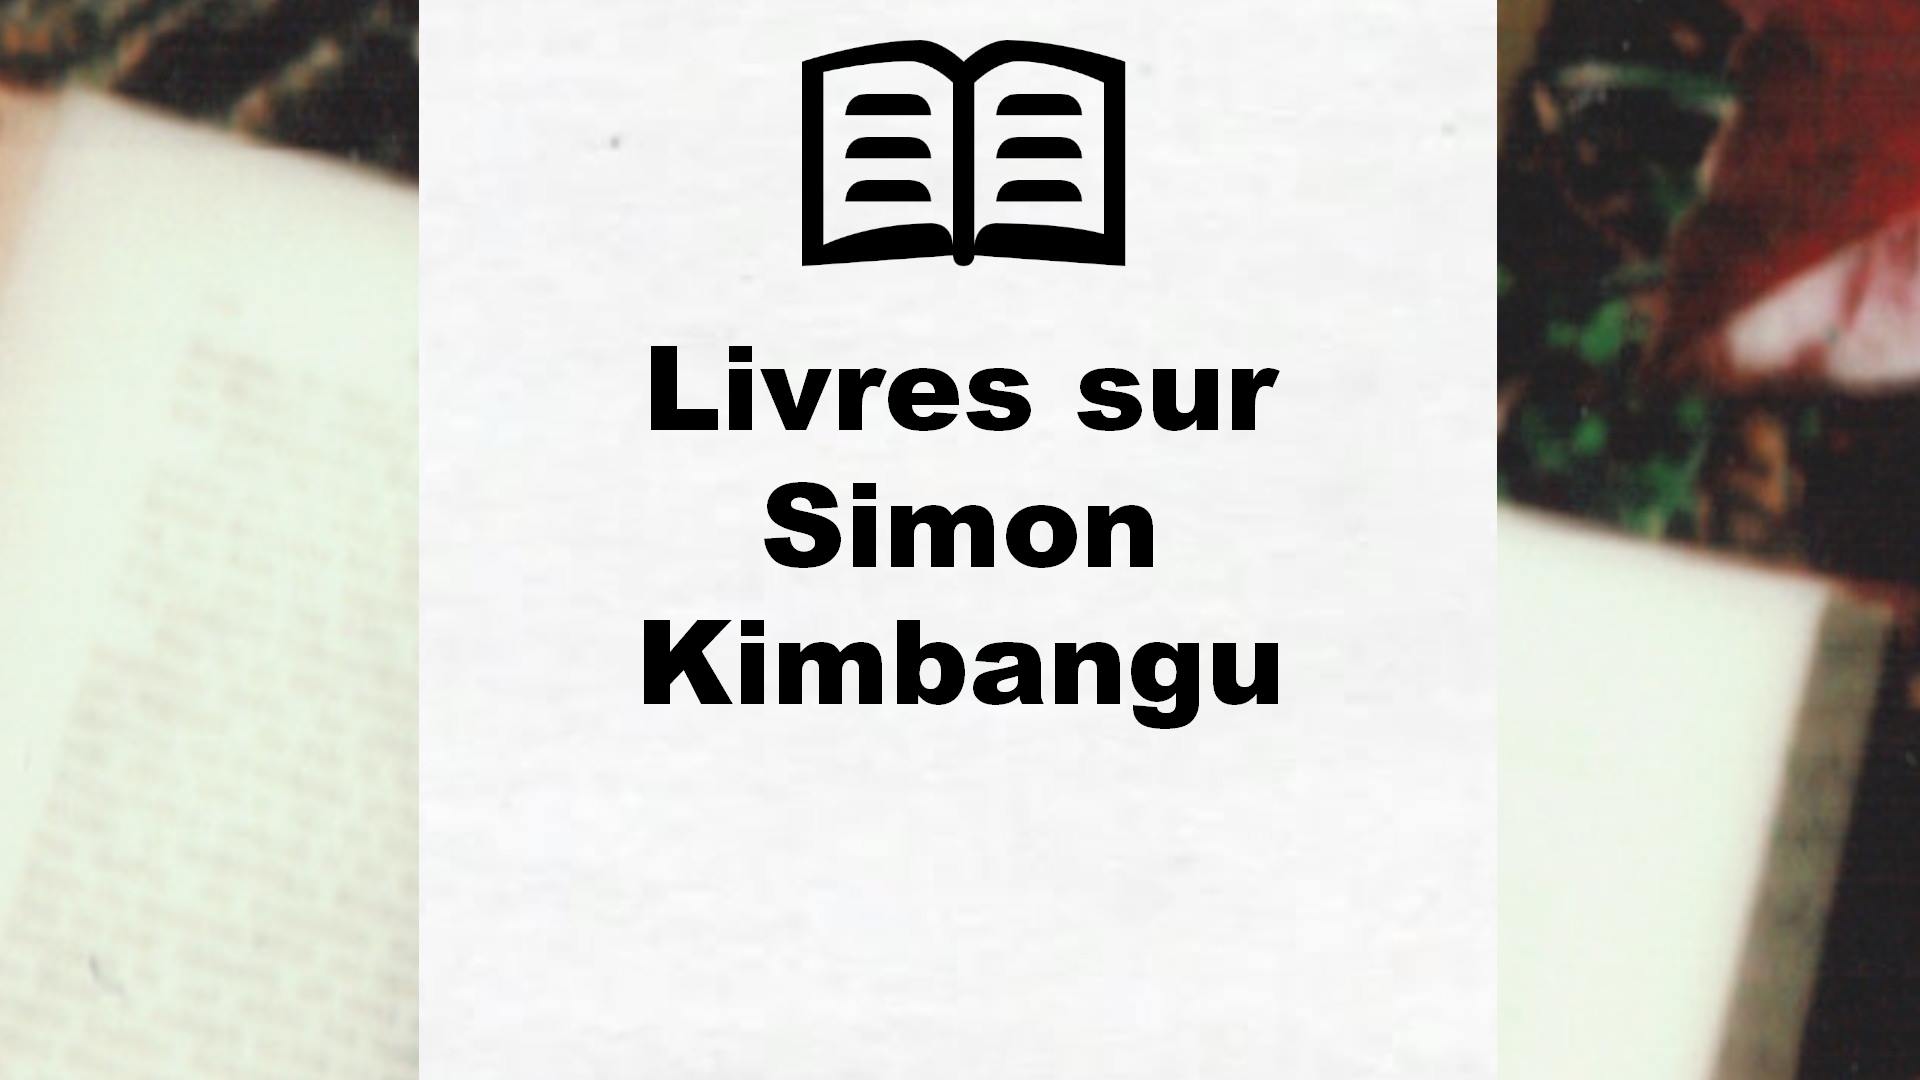 Livres sur Simon Kimbangu